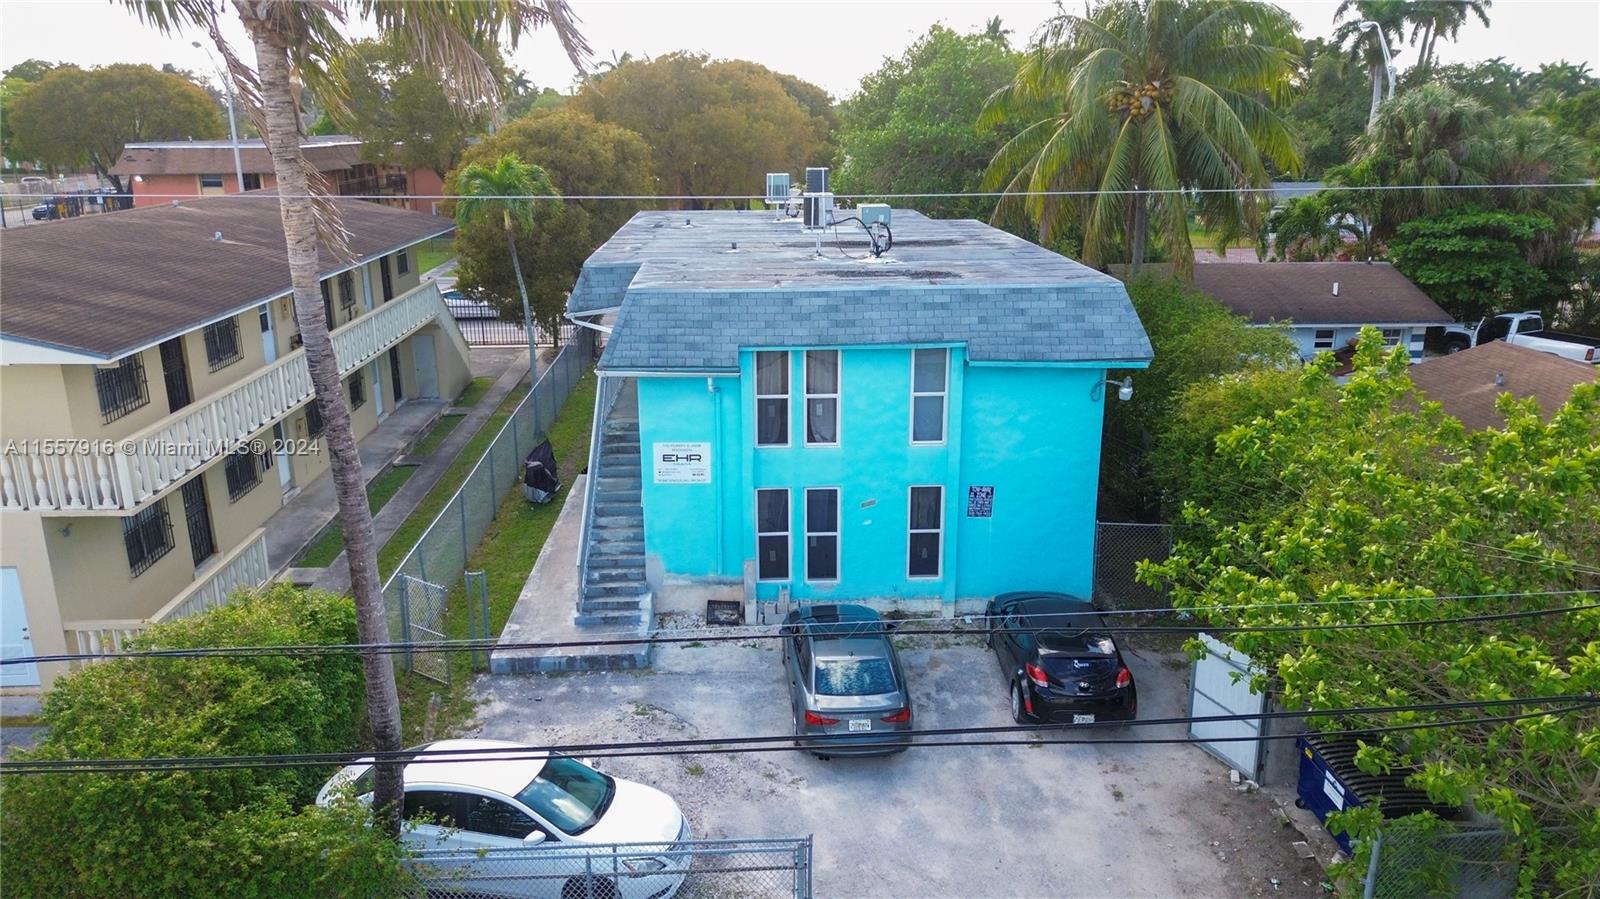 Rental Property at 8312 Ne Miami Ct Ct, Miami, Broward County, Florida -  - $1,050,000 MO.